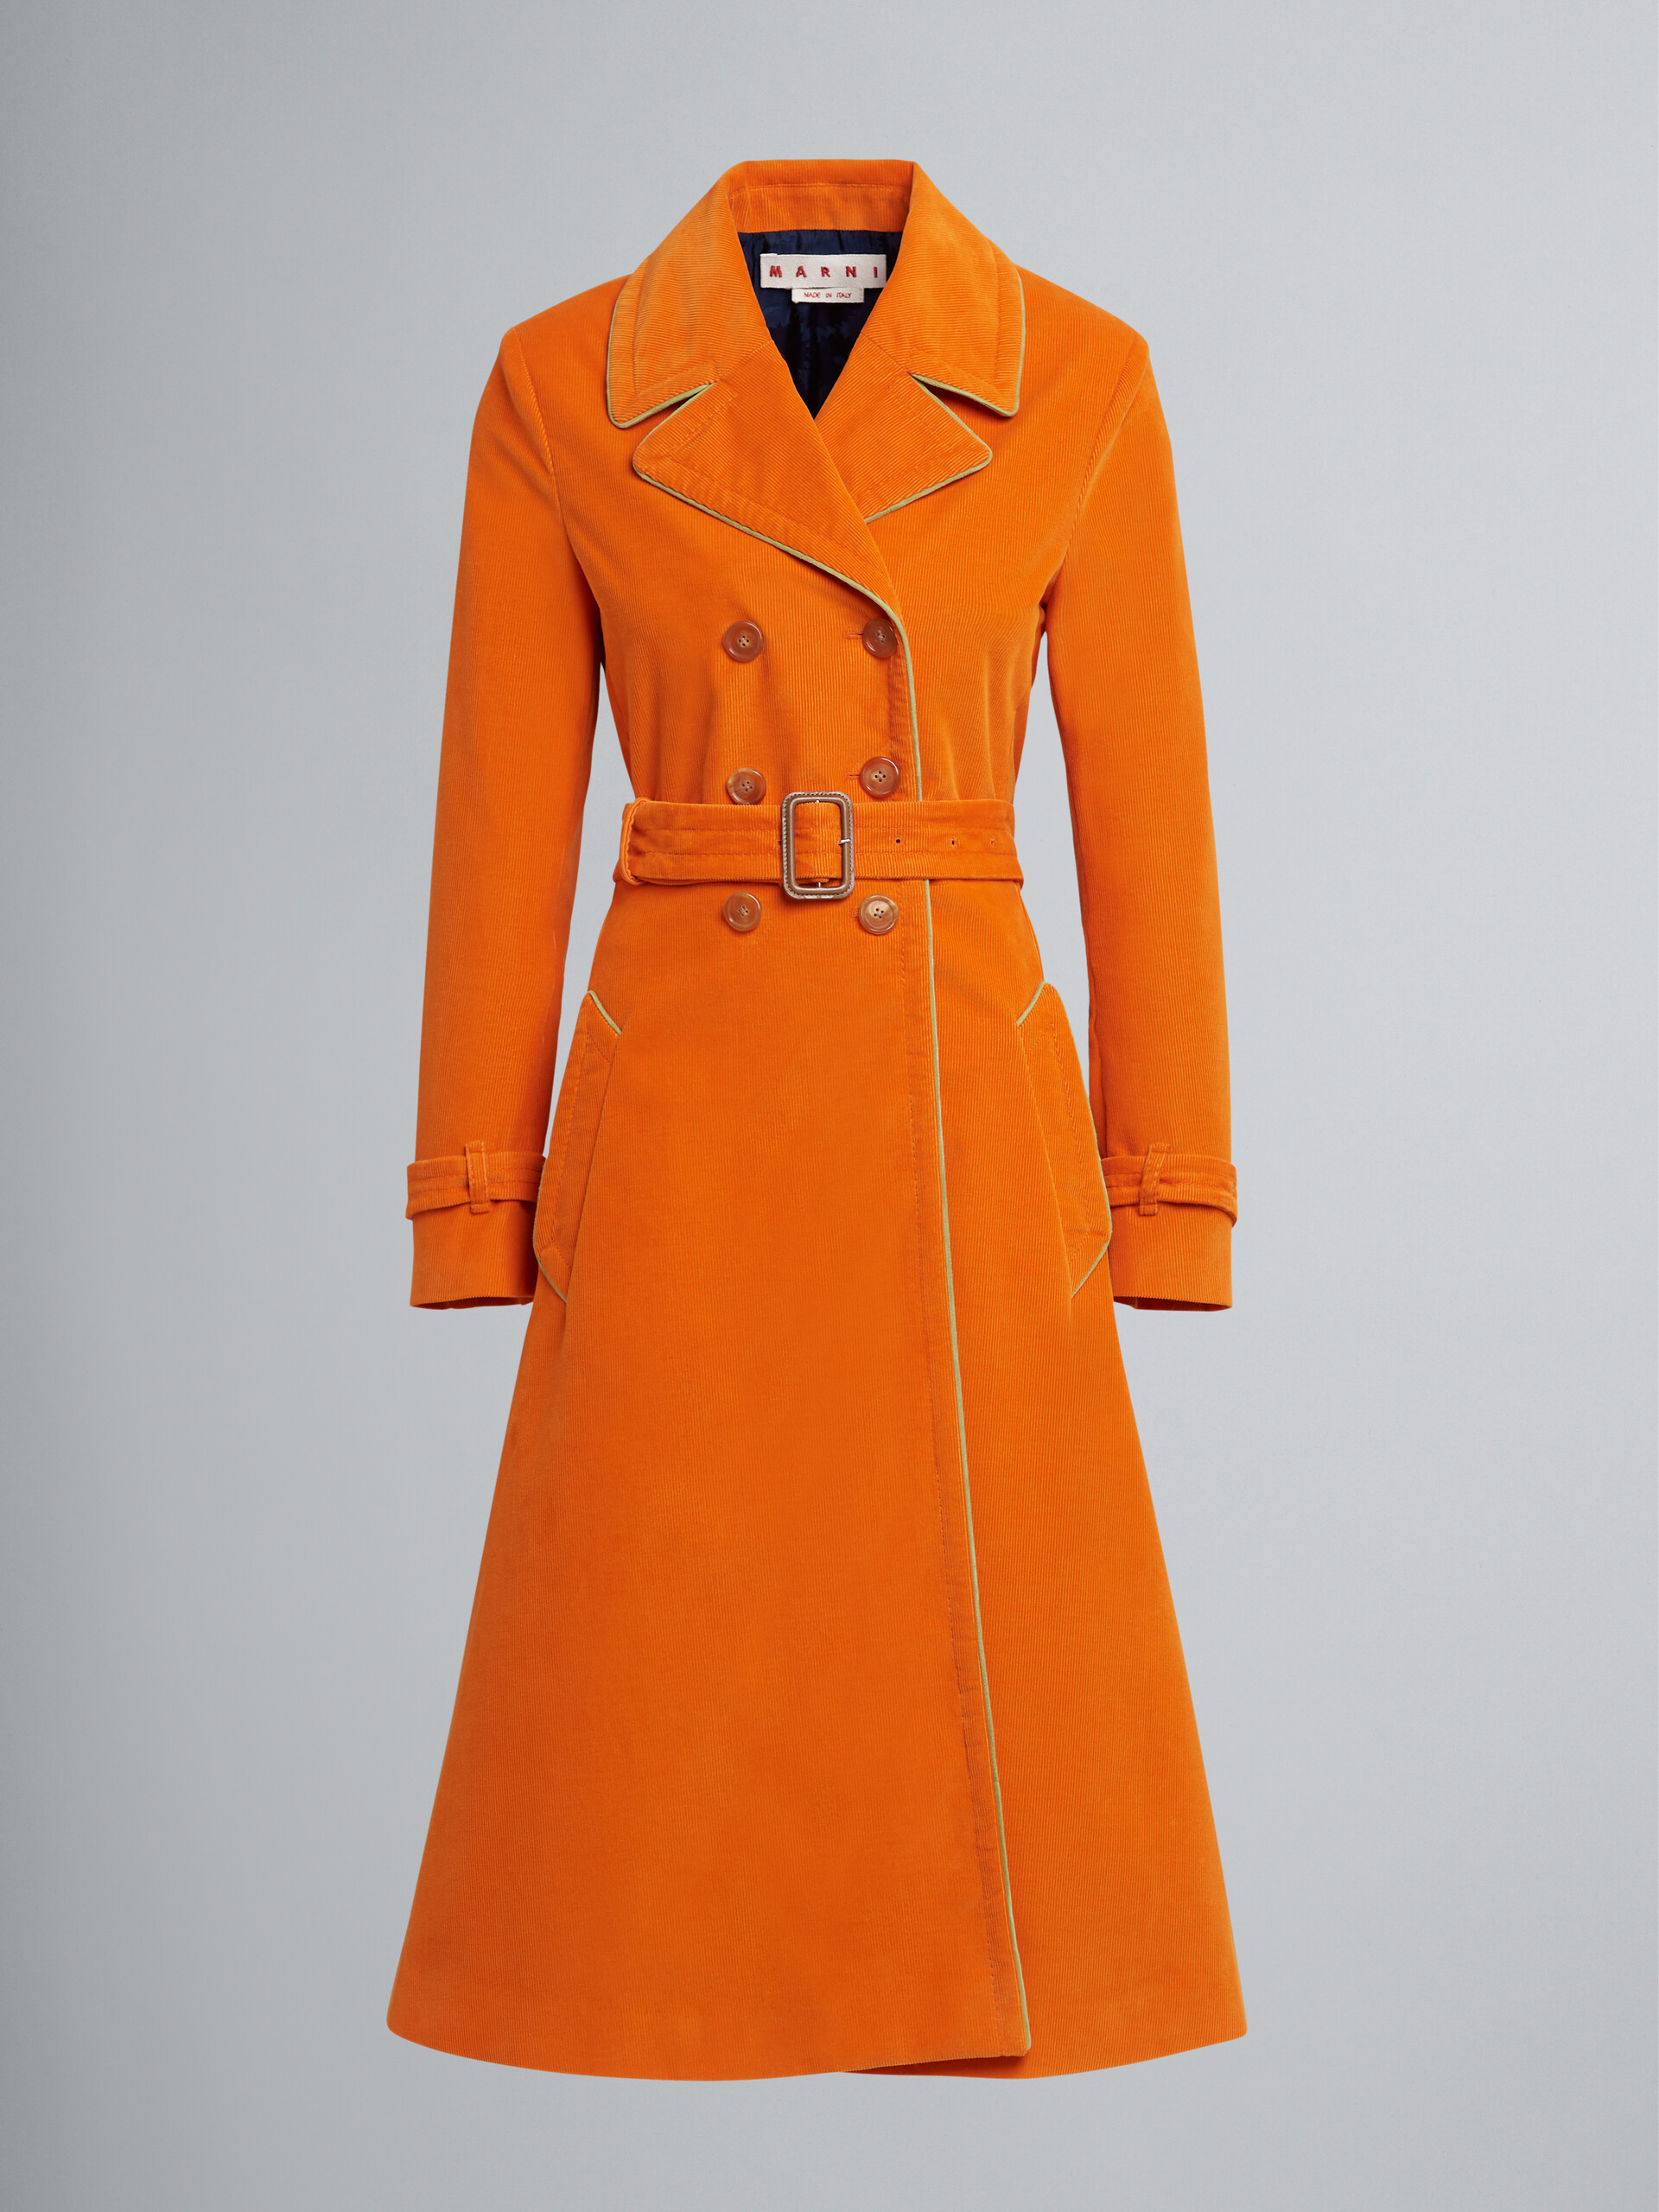 Fine wale corduroy coat - Coat - Image 1